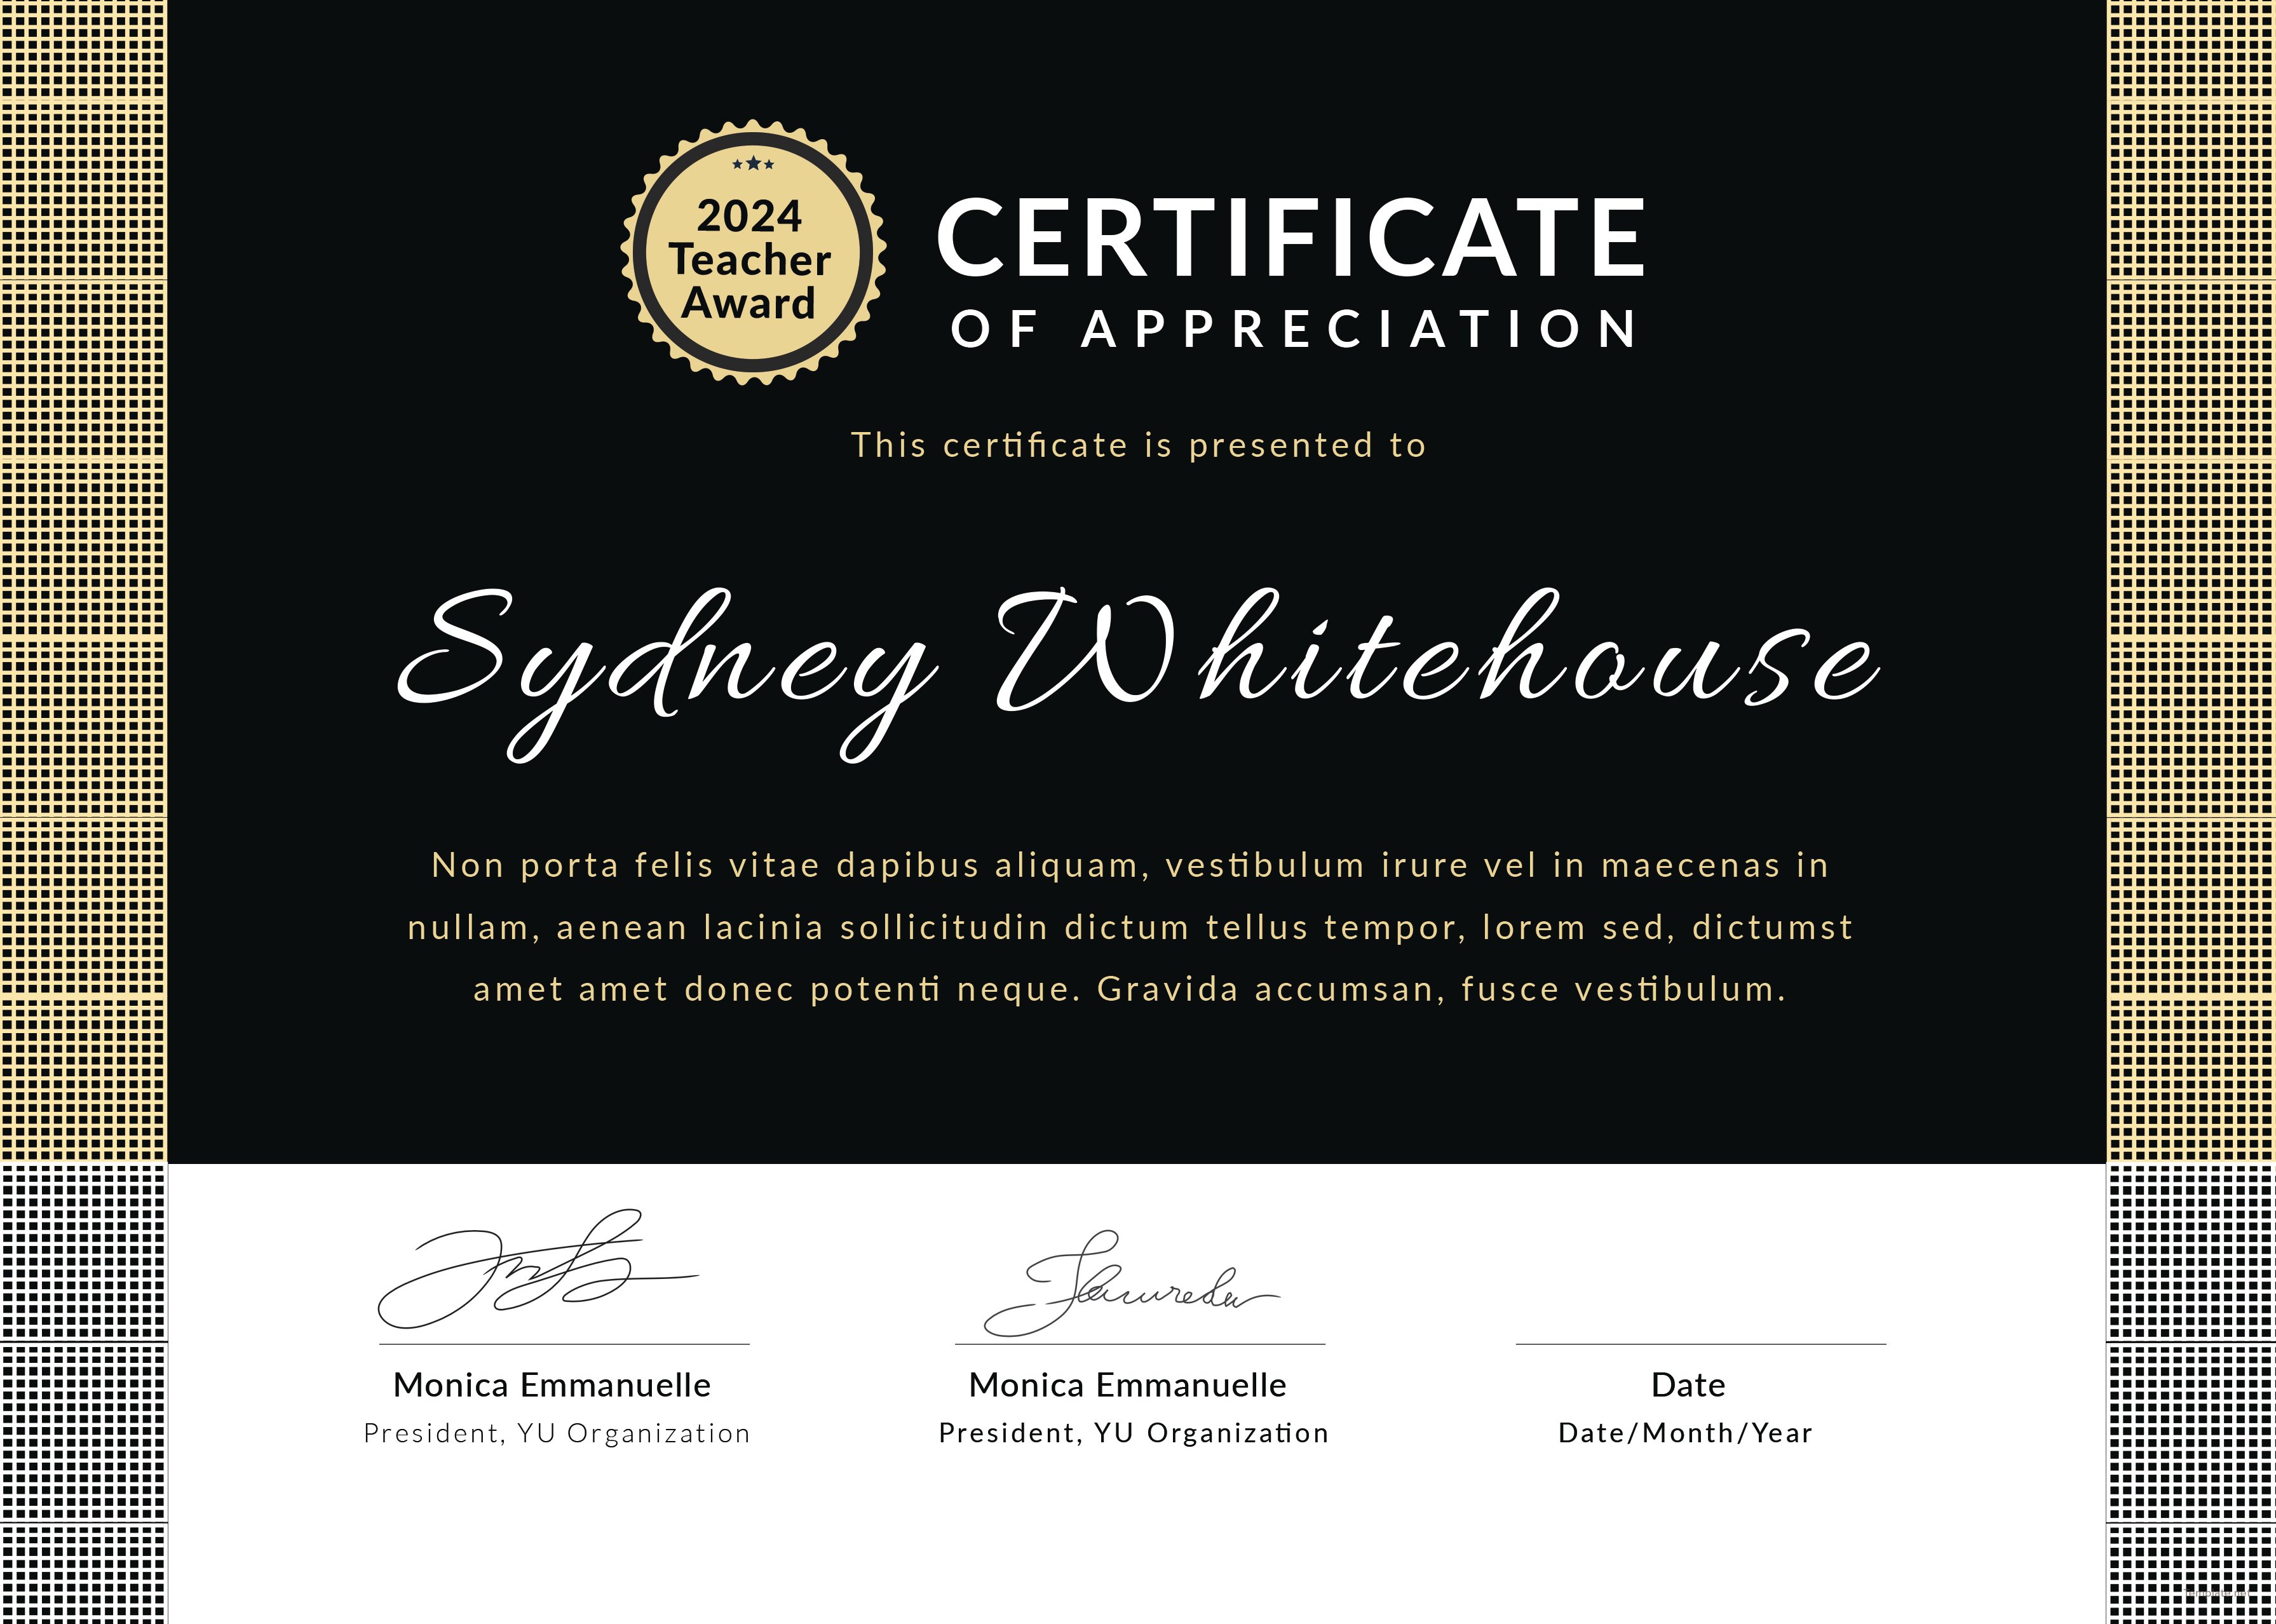 Free Teacher Appreciation Certificate Template In Adobe Photoshop Illustrator Template